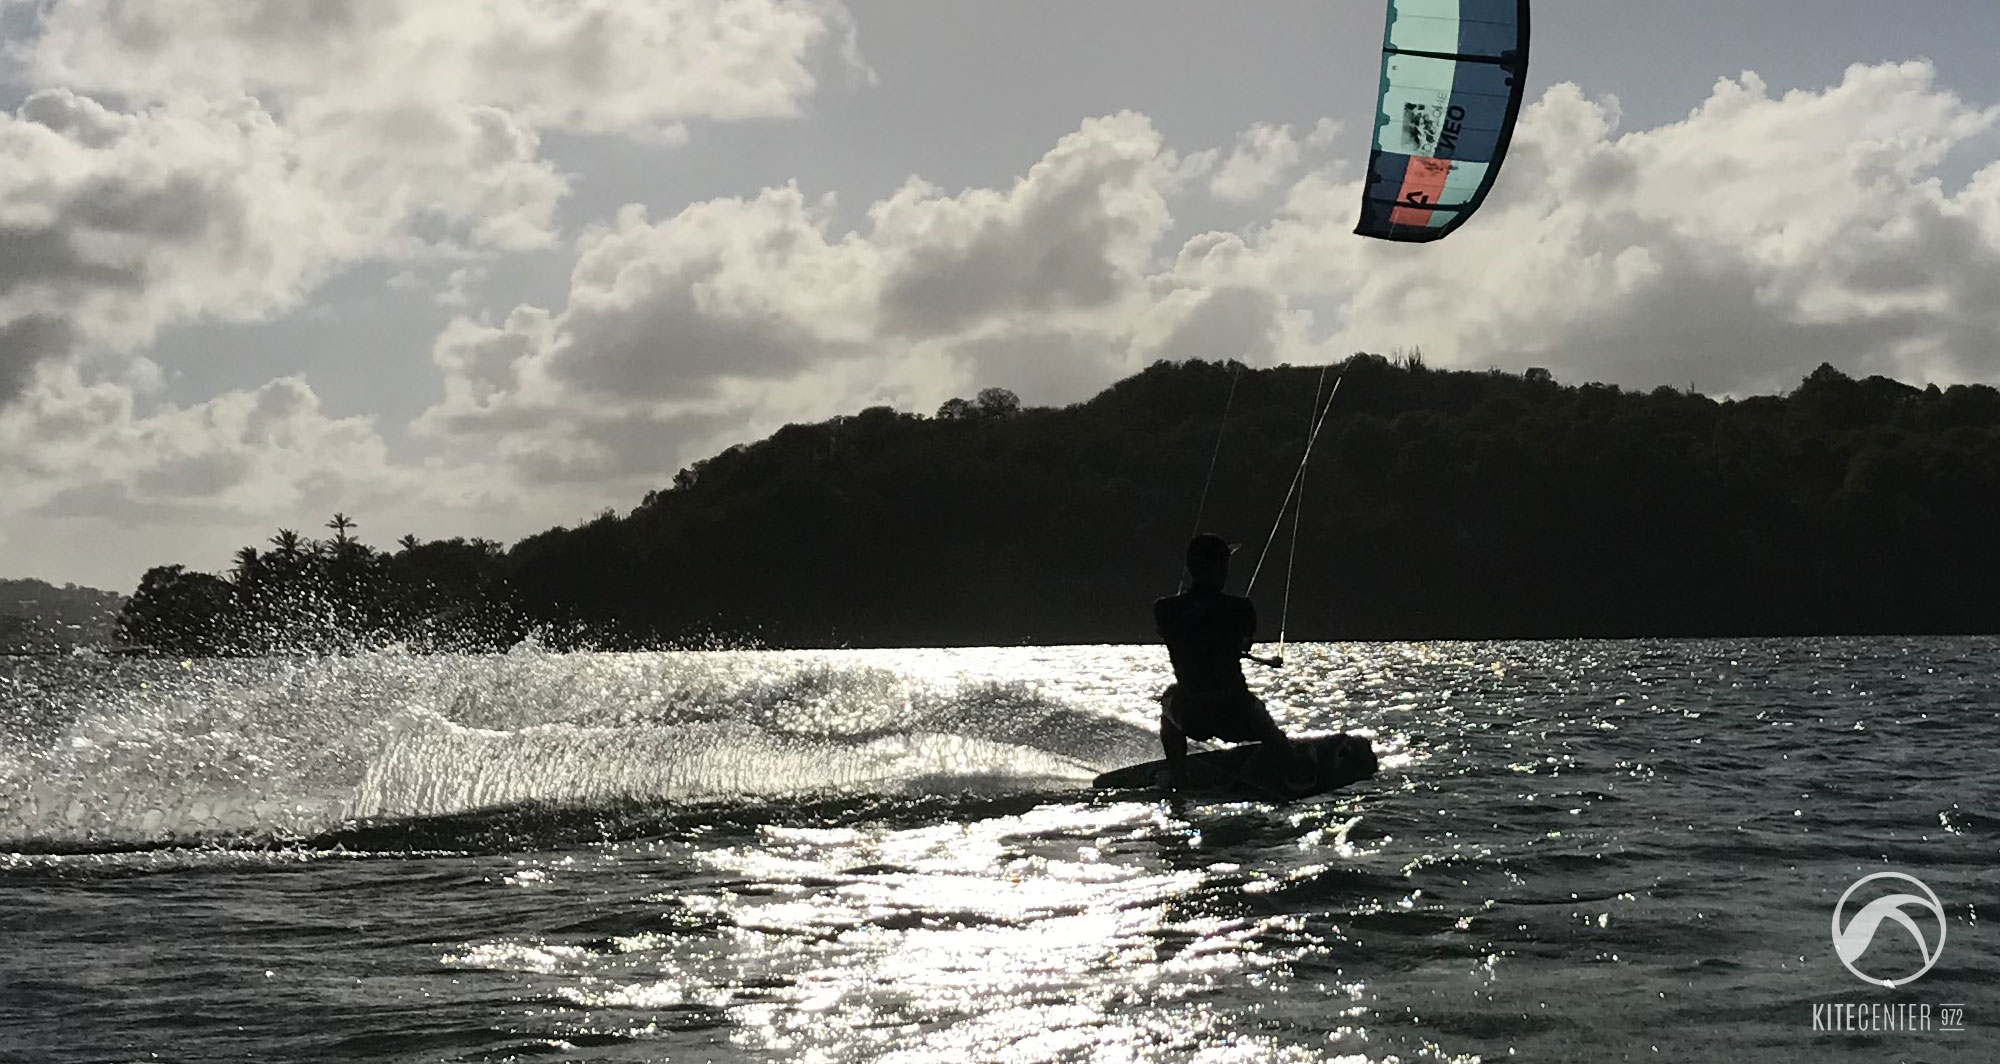 Waterstart Kitecenter 972 école de kitesurf en Martinique